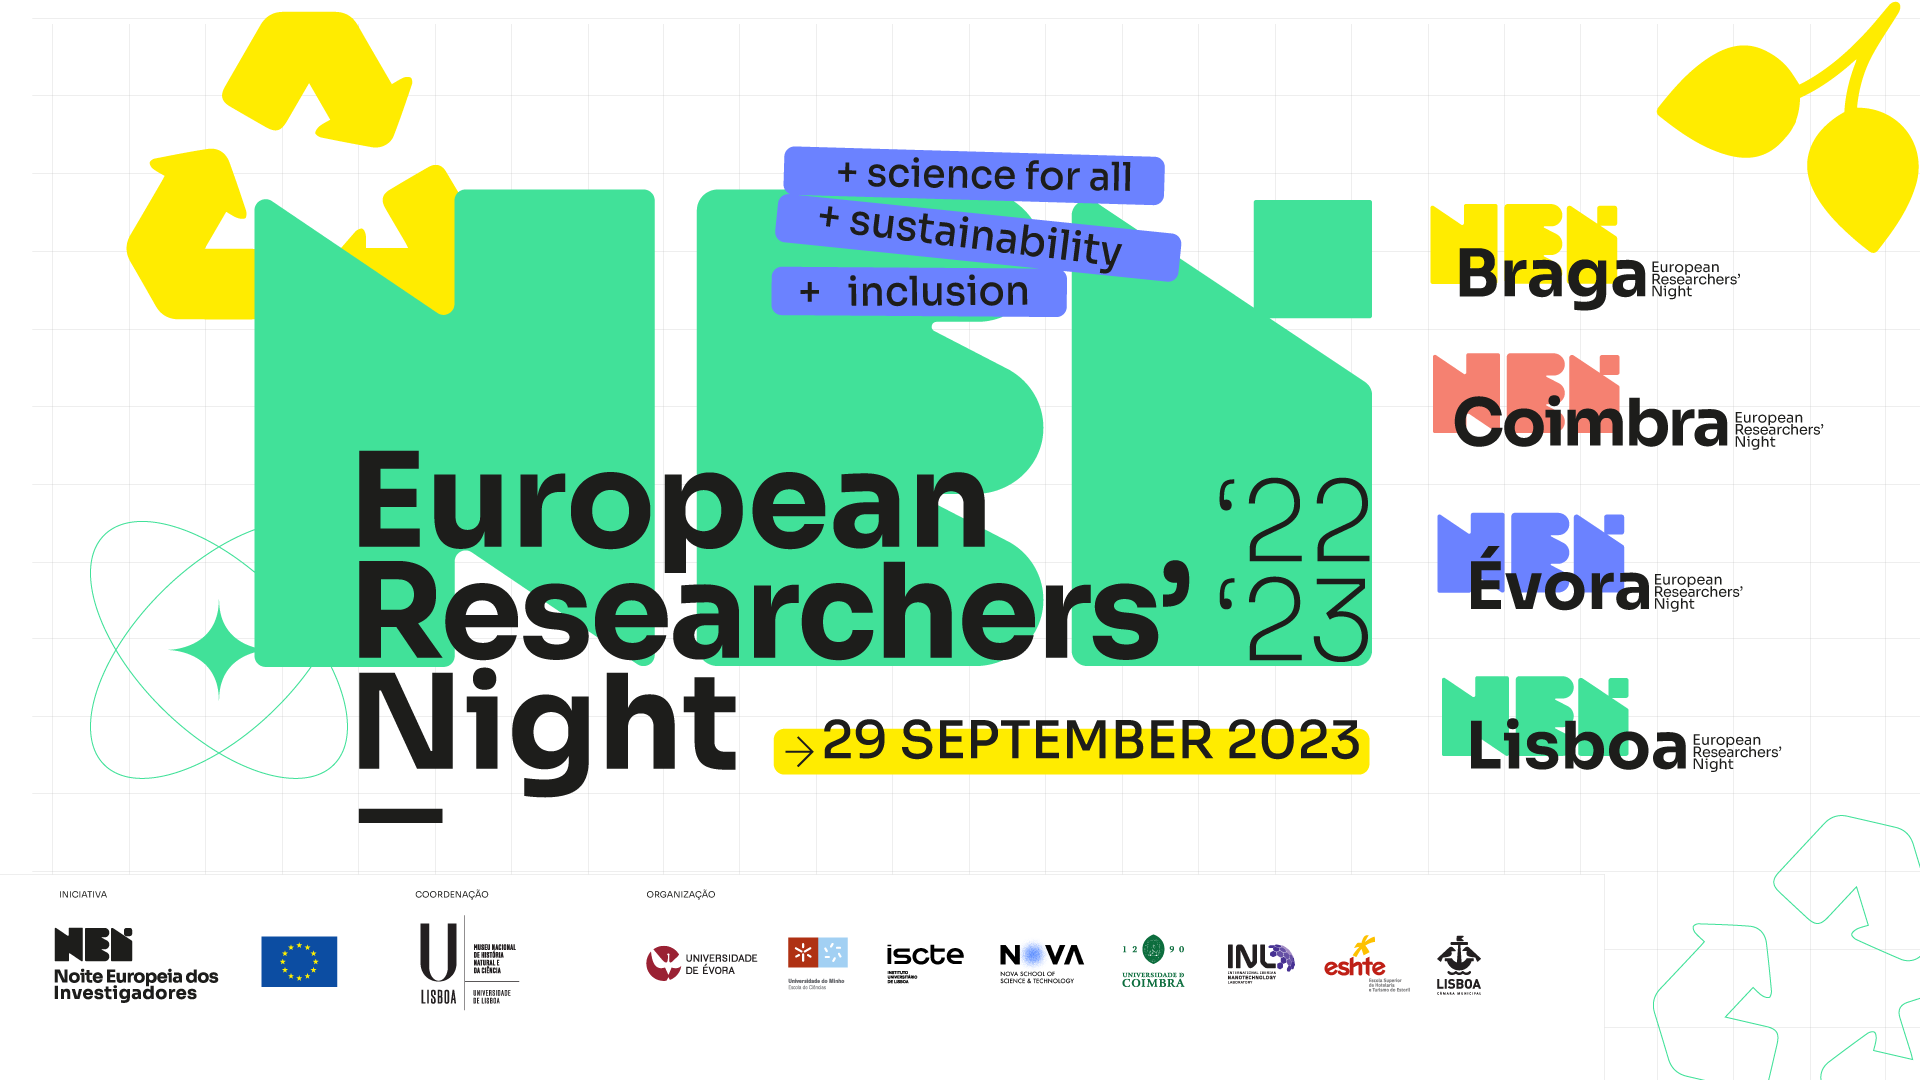 European Researchers’ Night returns next week to Braga